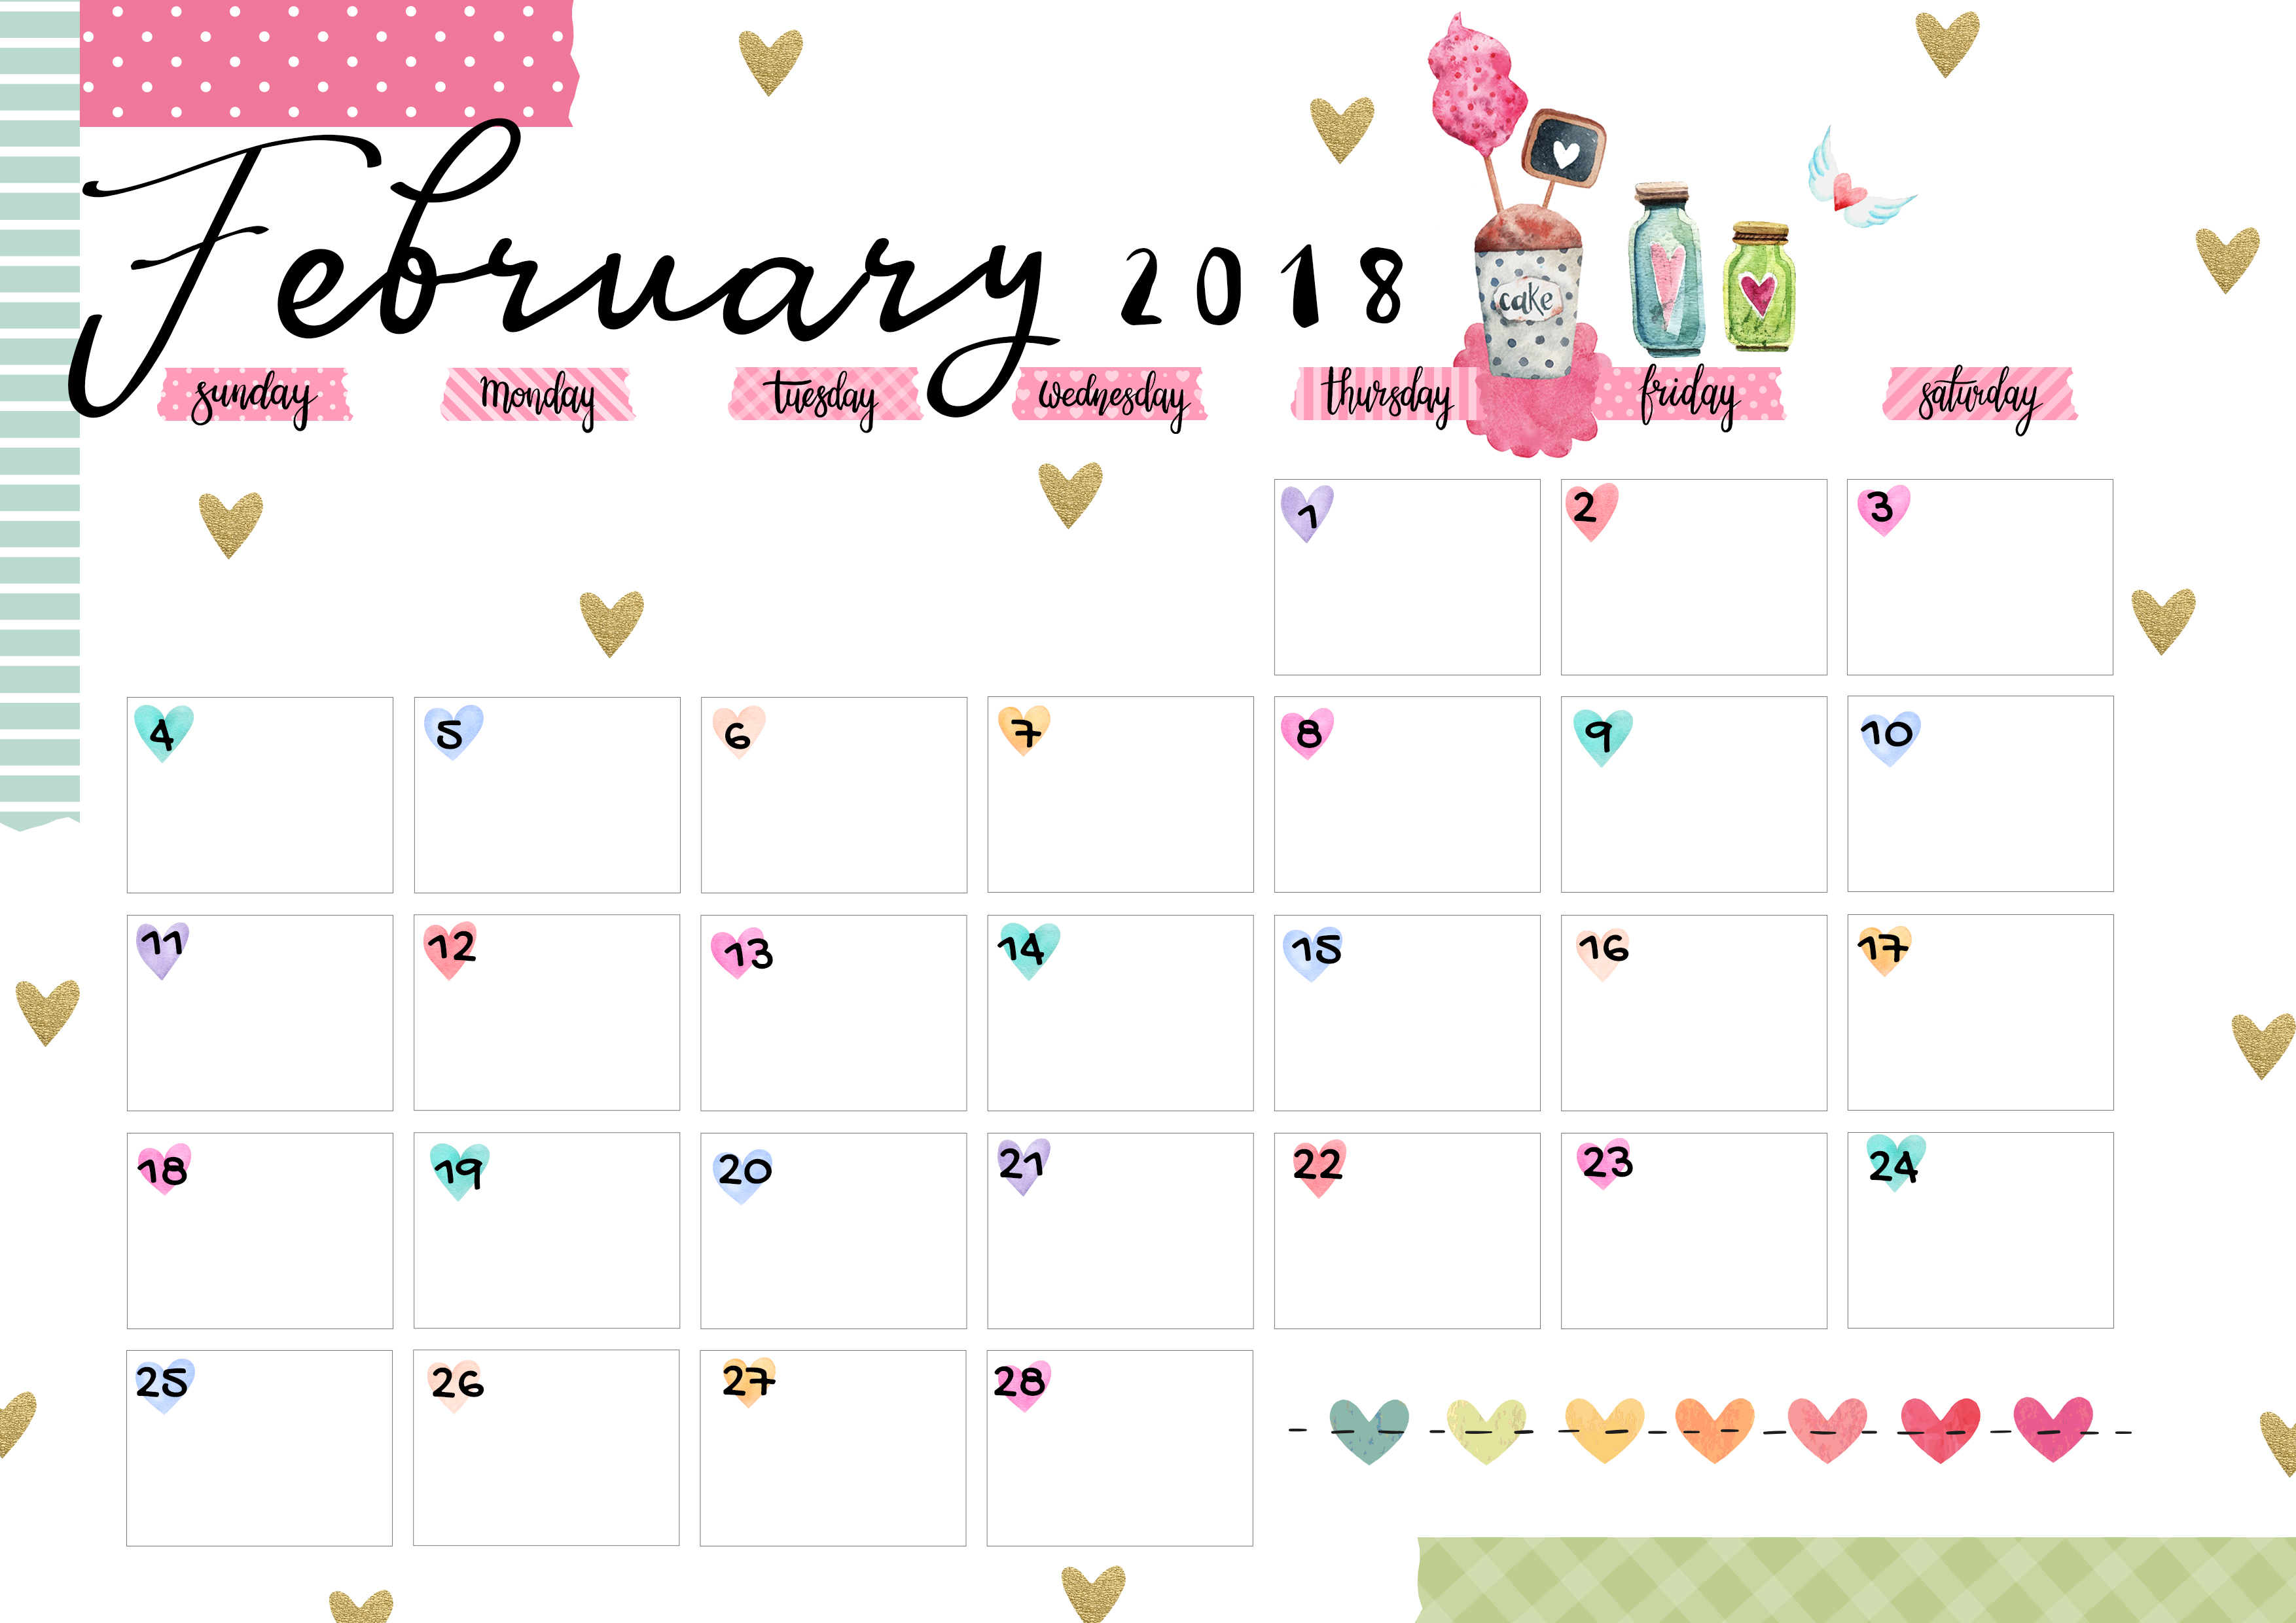 calendar-january-2018-uk-bank-holidays-excel-pdf-word-templates